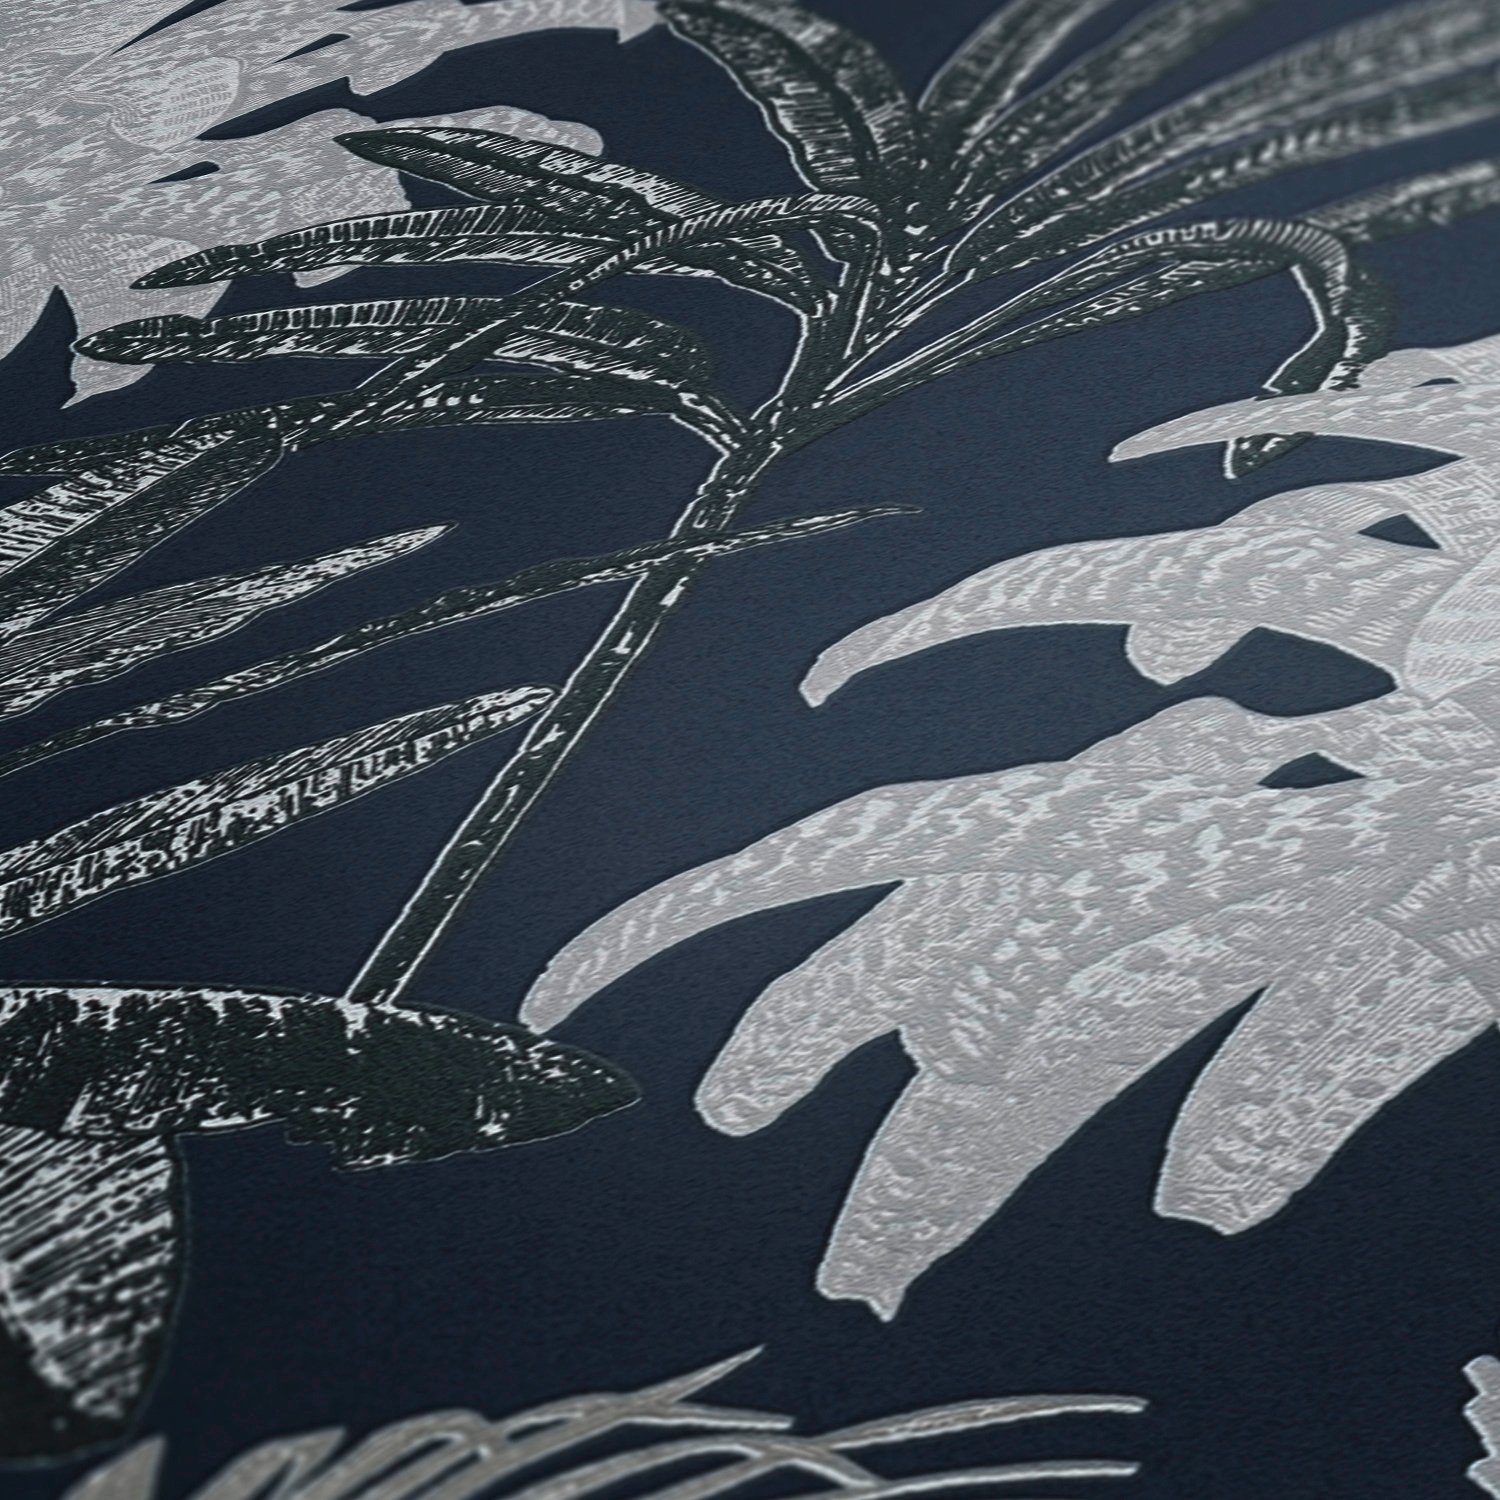 A.S. Designertapete tropisch, METROPOLIS LIVING Palmen BY floral, Création blau/grau/weiß botanisch, good, MICHALSKY Tale, Tropical Tapete Vliestapete is Change